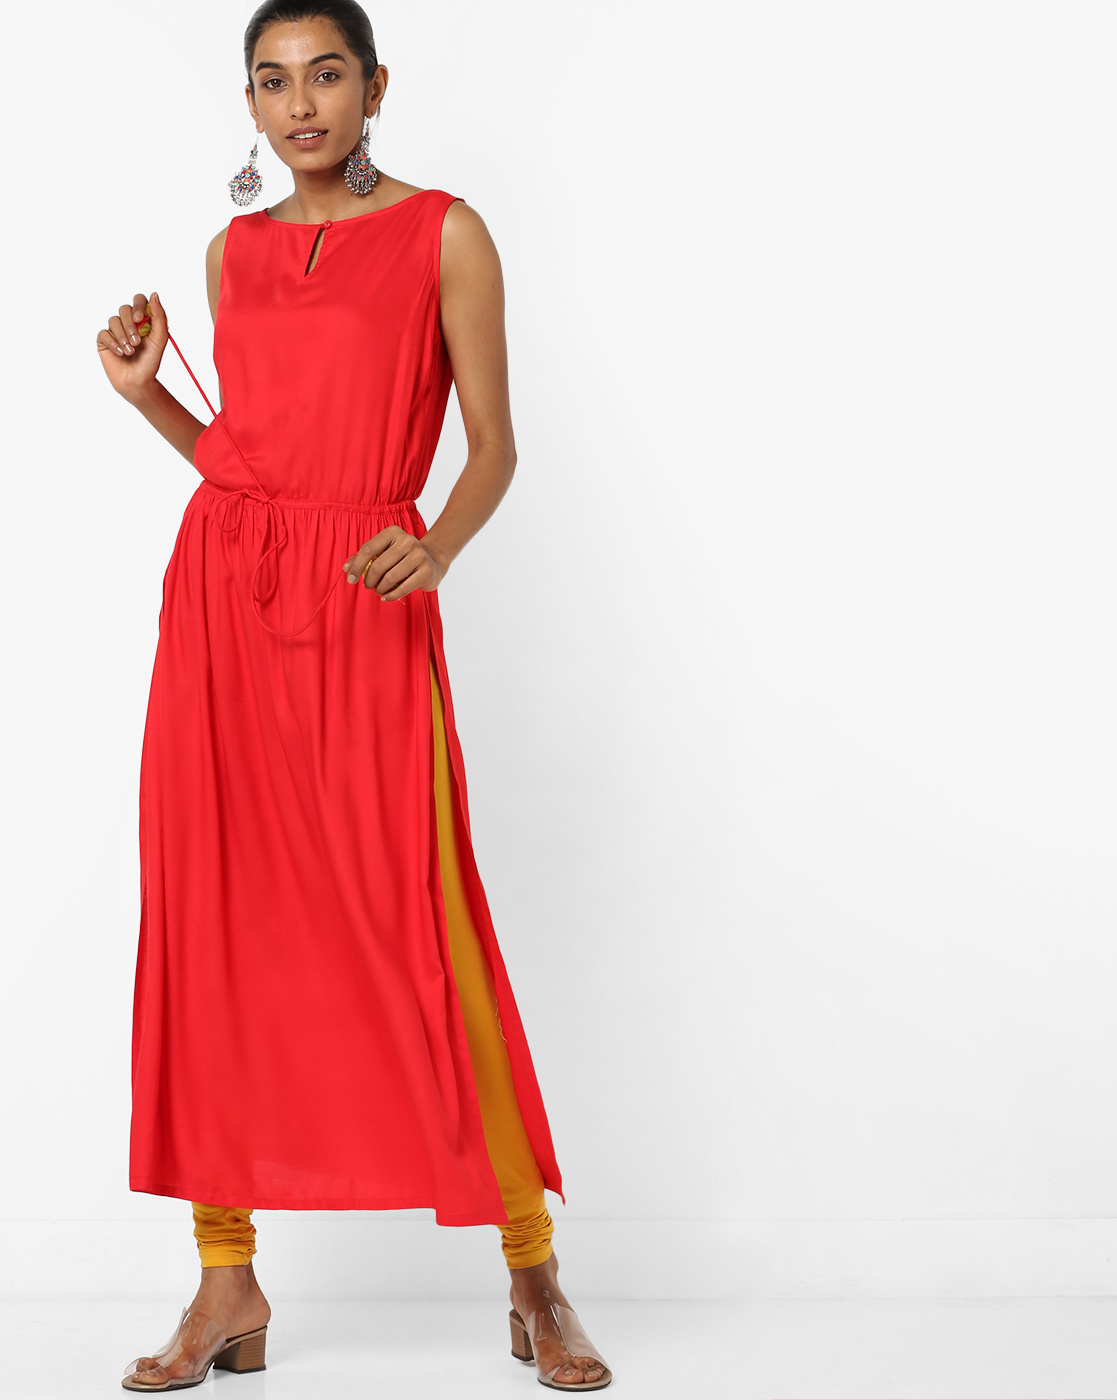 Buy JANASYA Solid Chanderi Boat Neck Women's Salwar Suit | Shoppers Stop-gemektower.com.vn